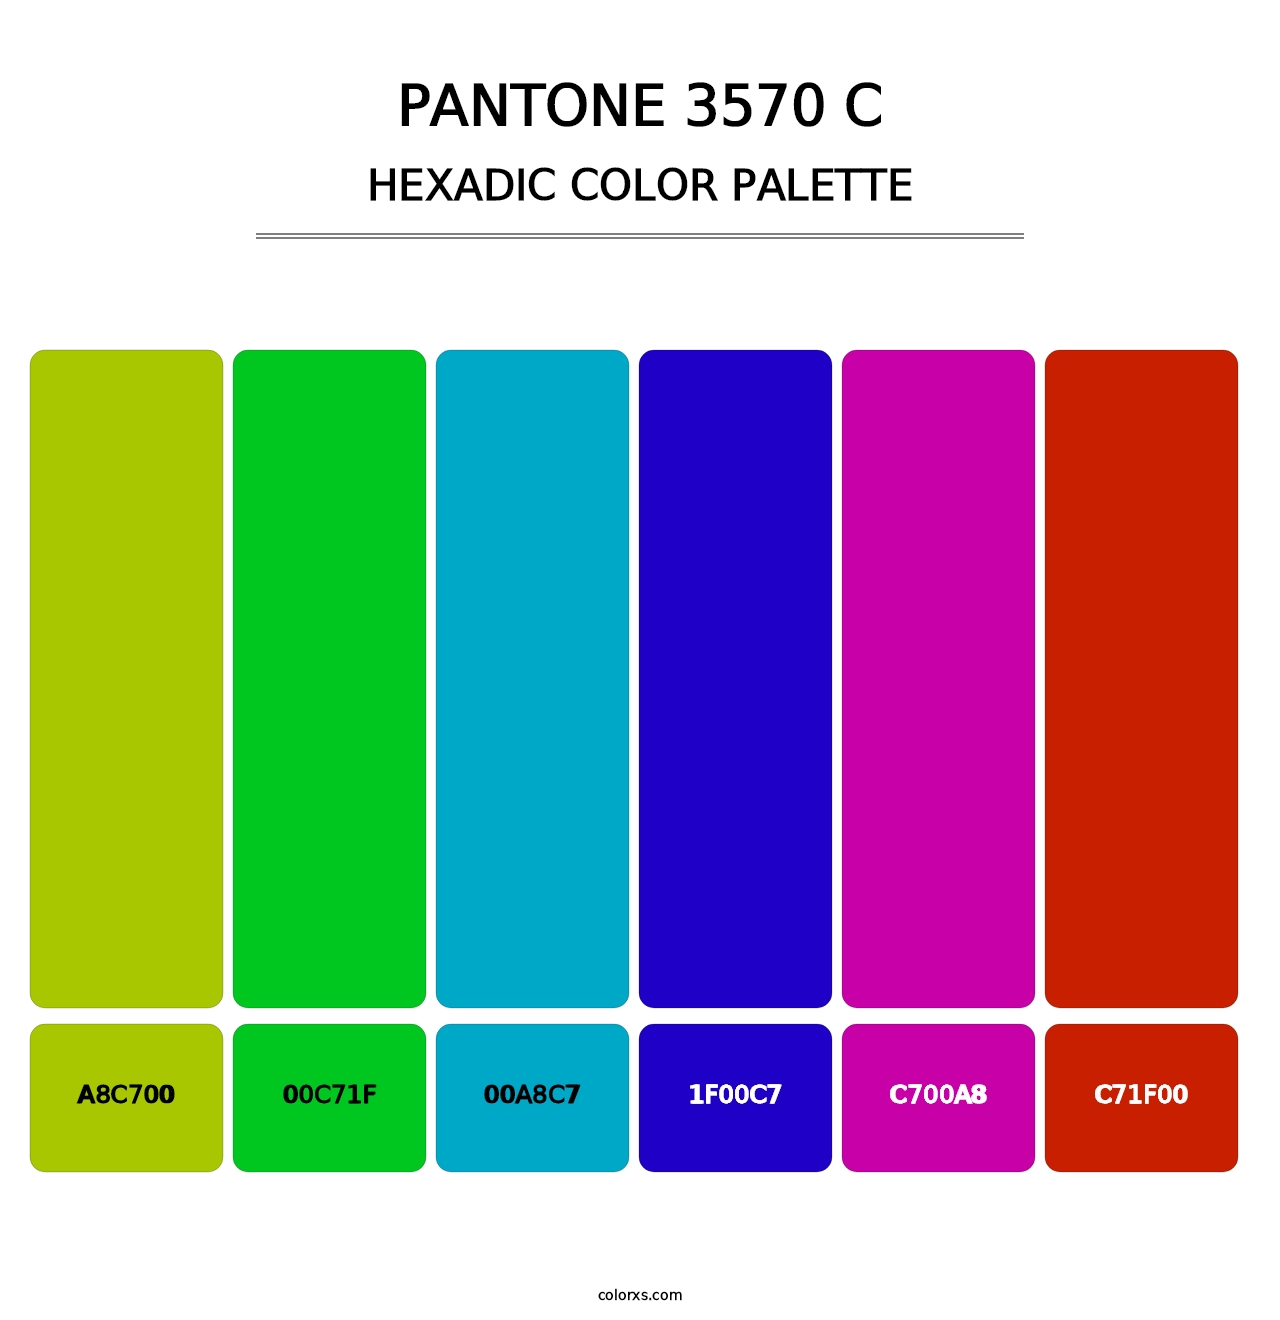 PANTONE 3570 C - Hexadic Color Palette